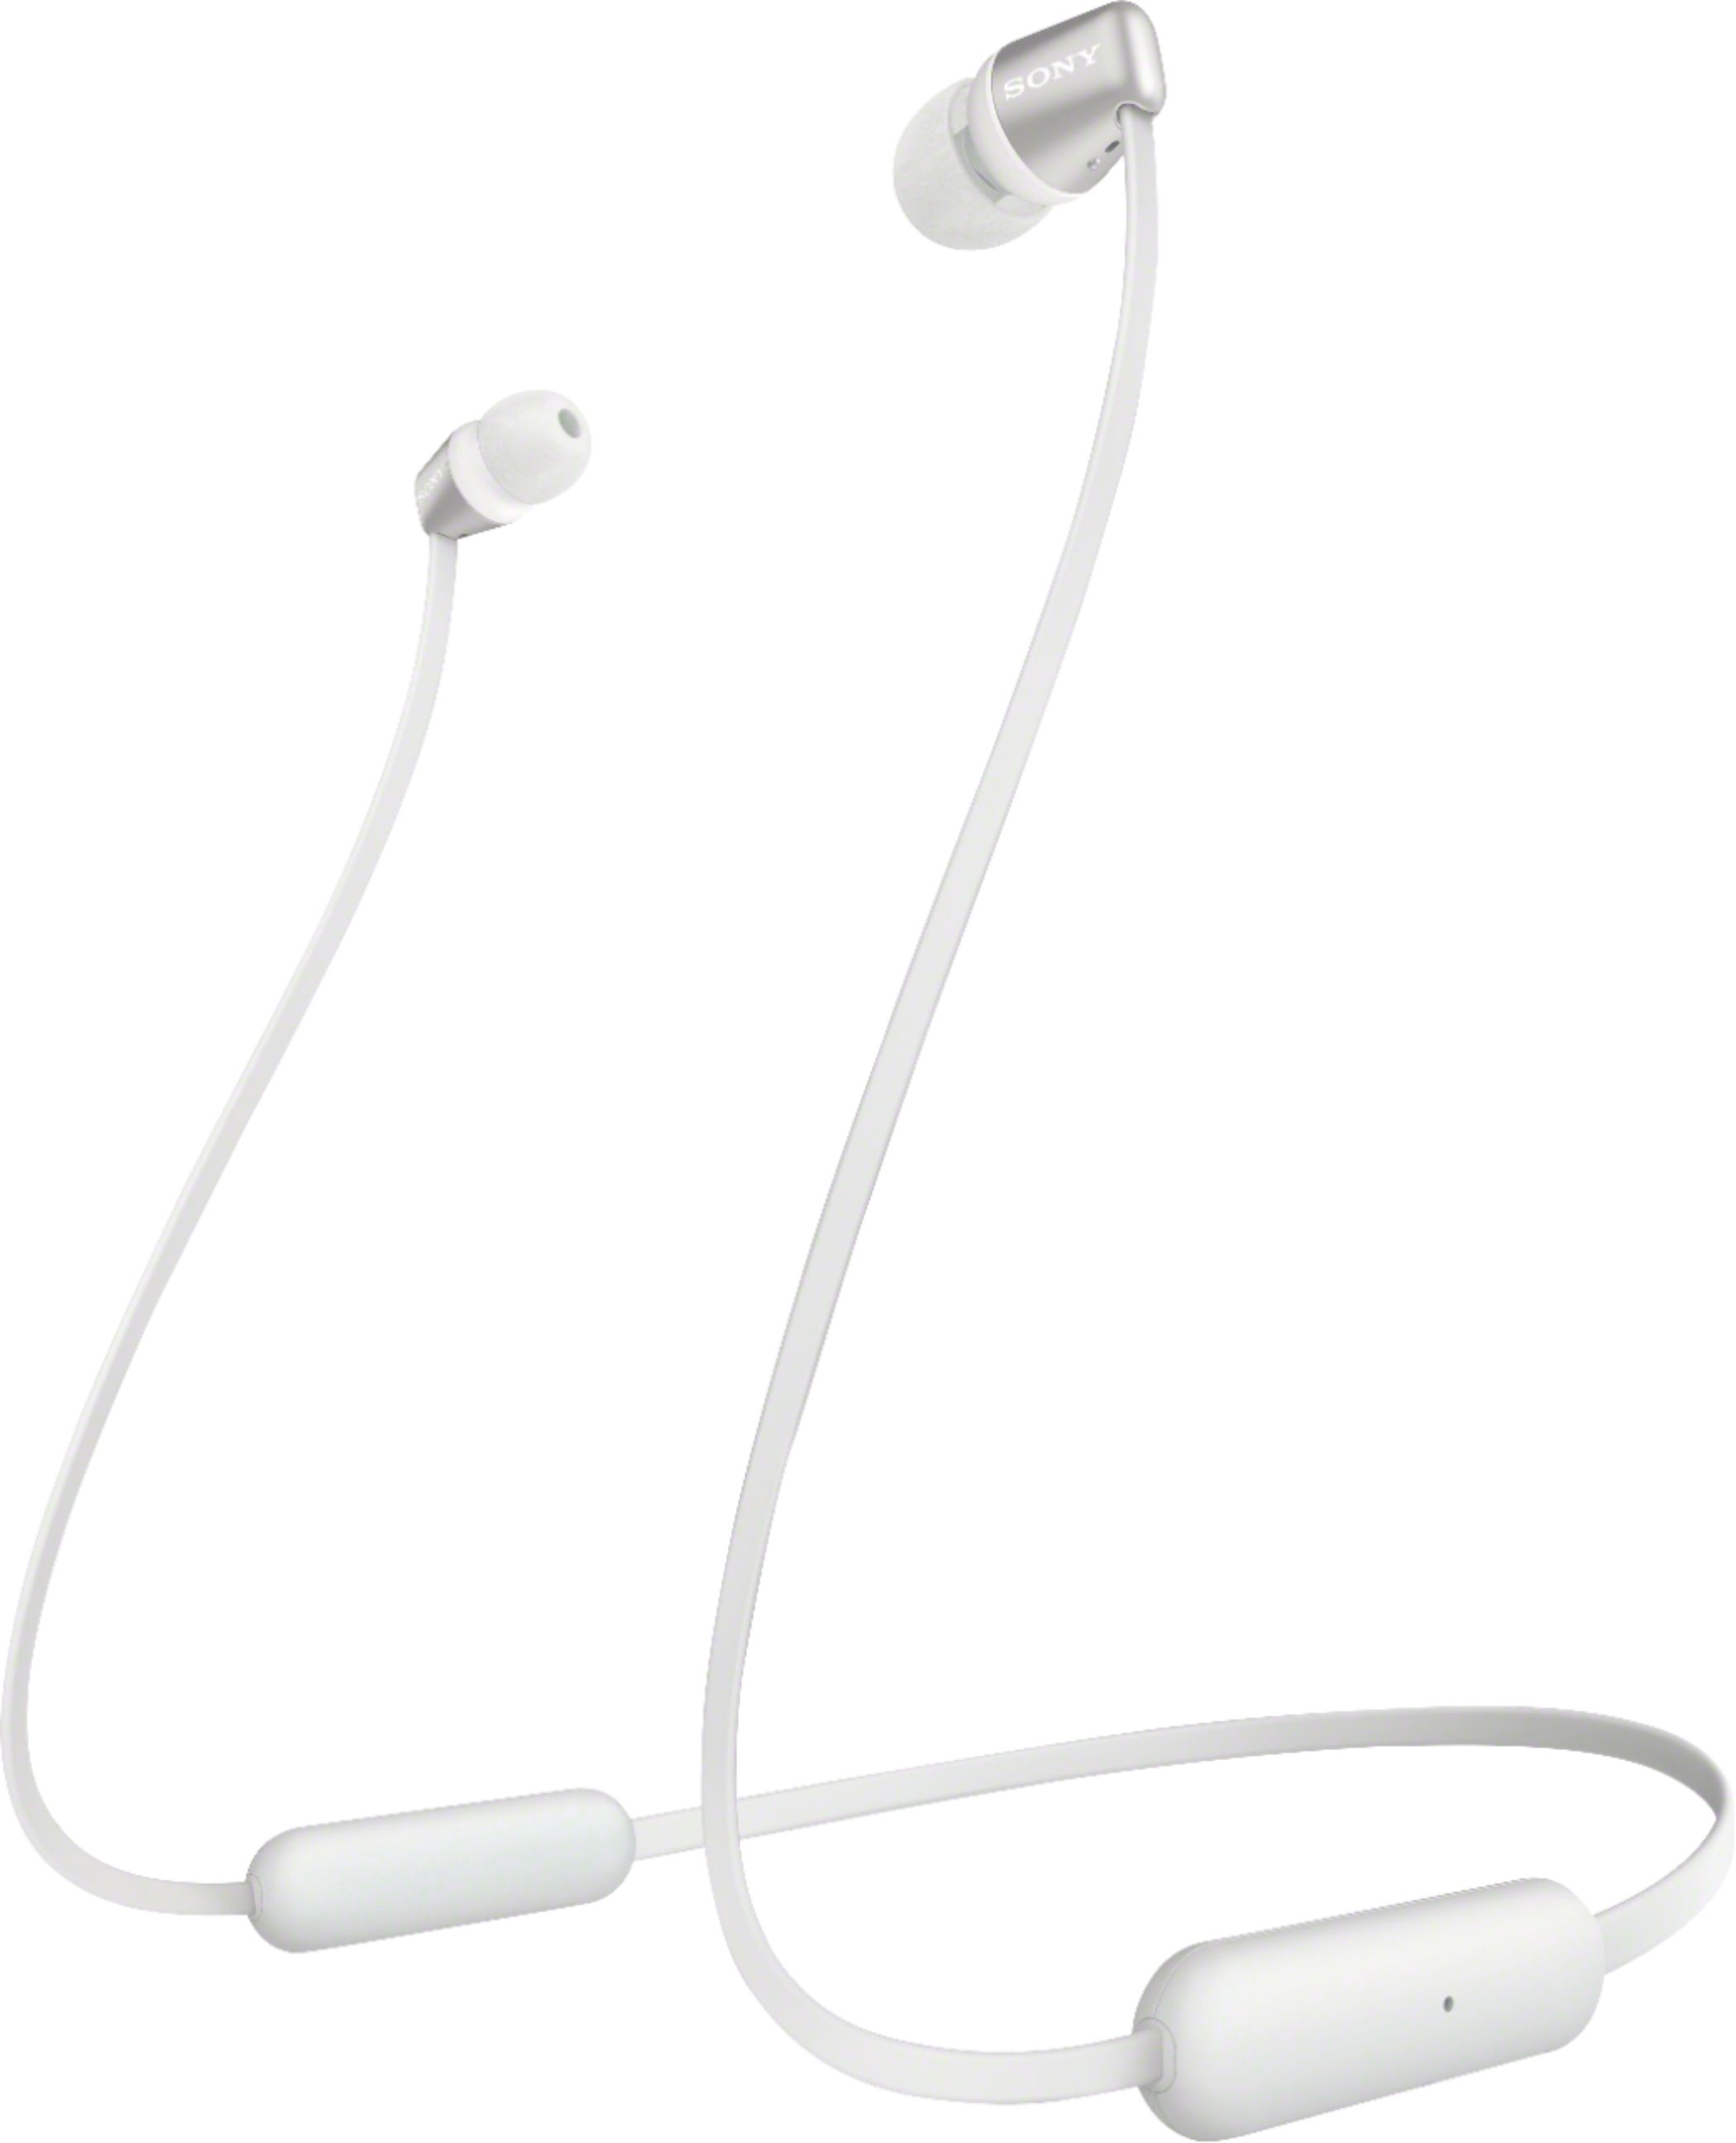 Angle View: Sony - WI-C310 Wireless In-Ear Headphones - Blue